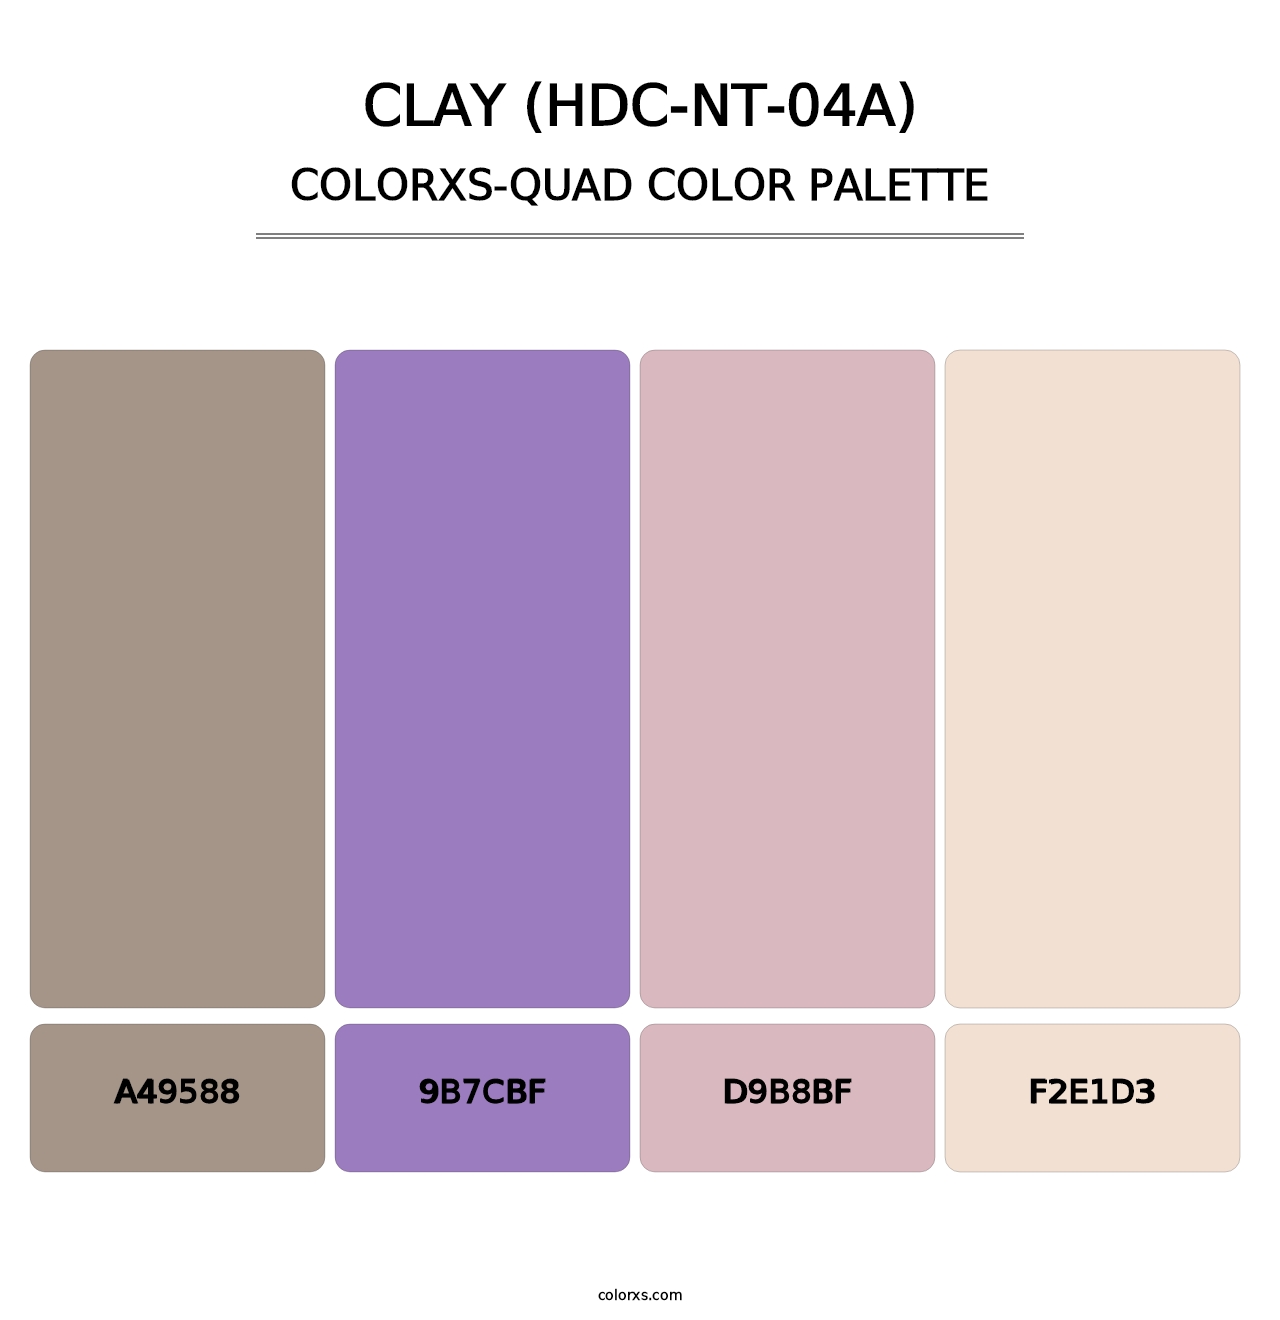 Clay (HDC-NT-04A) - Colorxs Quad Palette